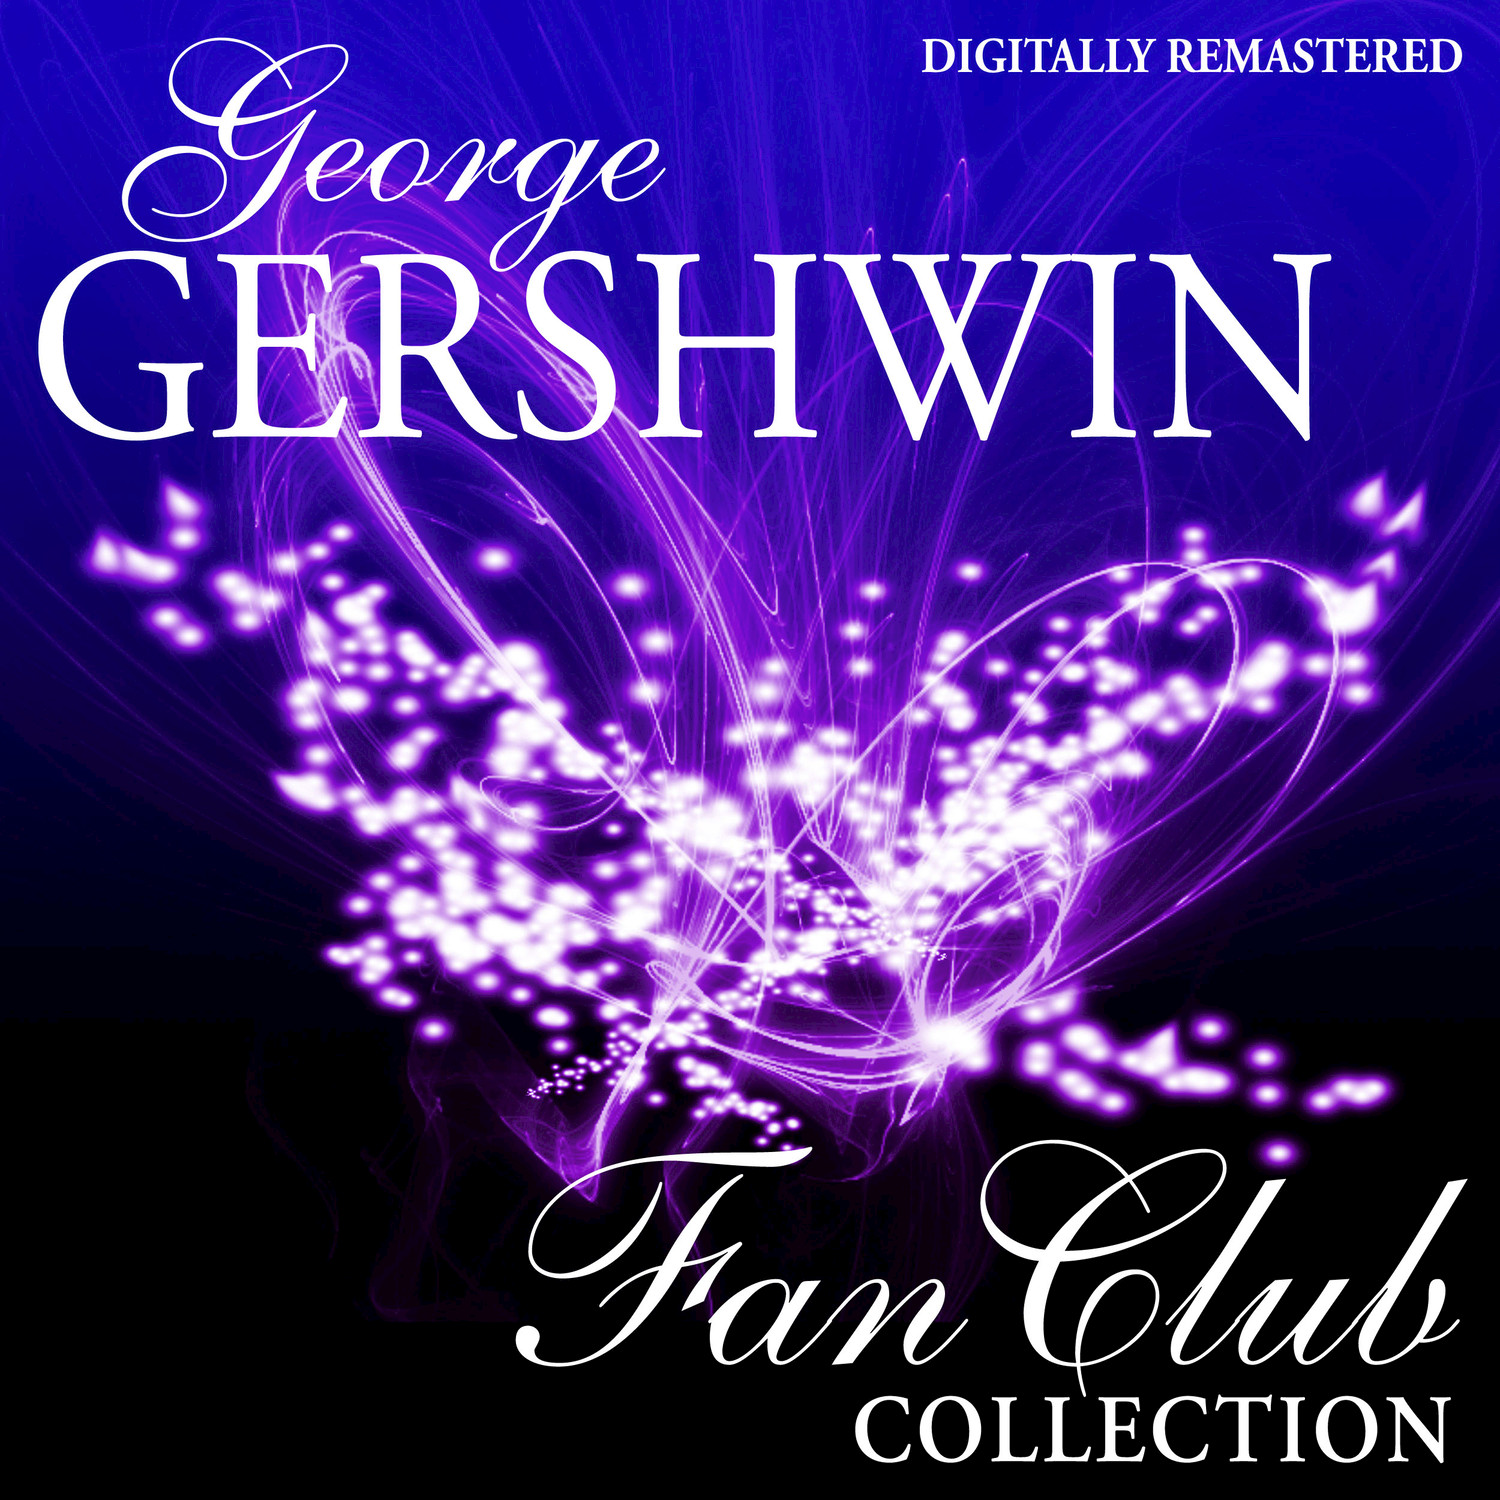 George Gershwin Fan Club Collection